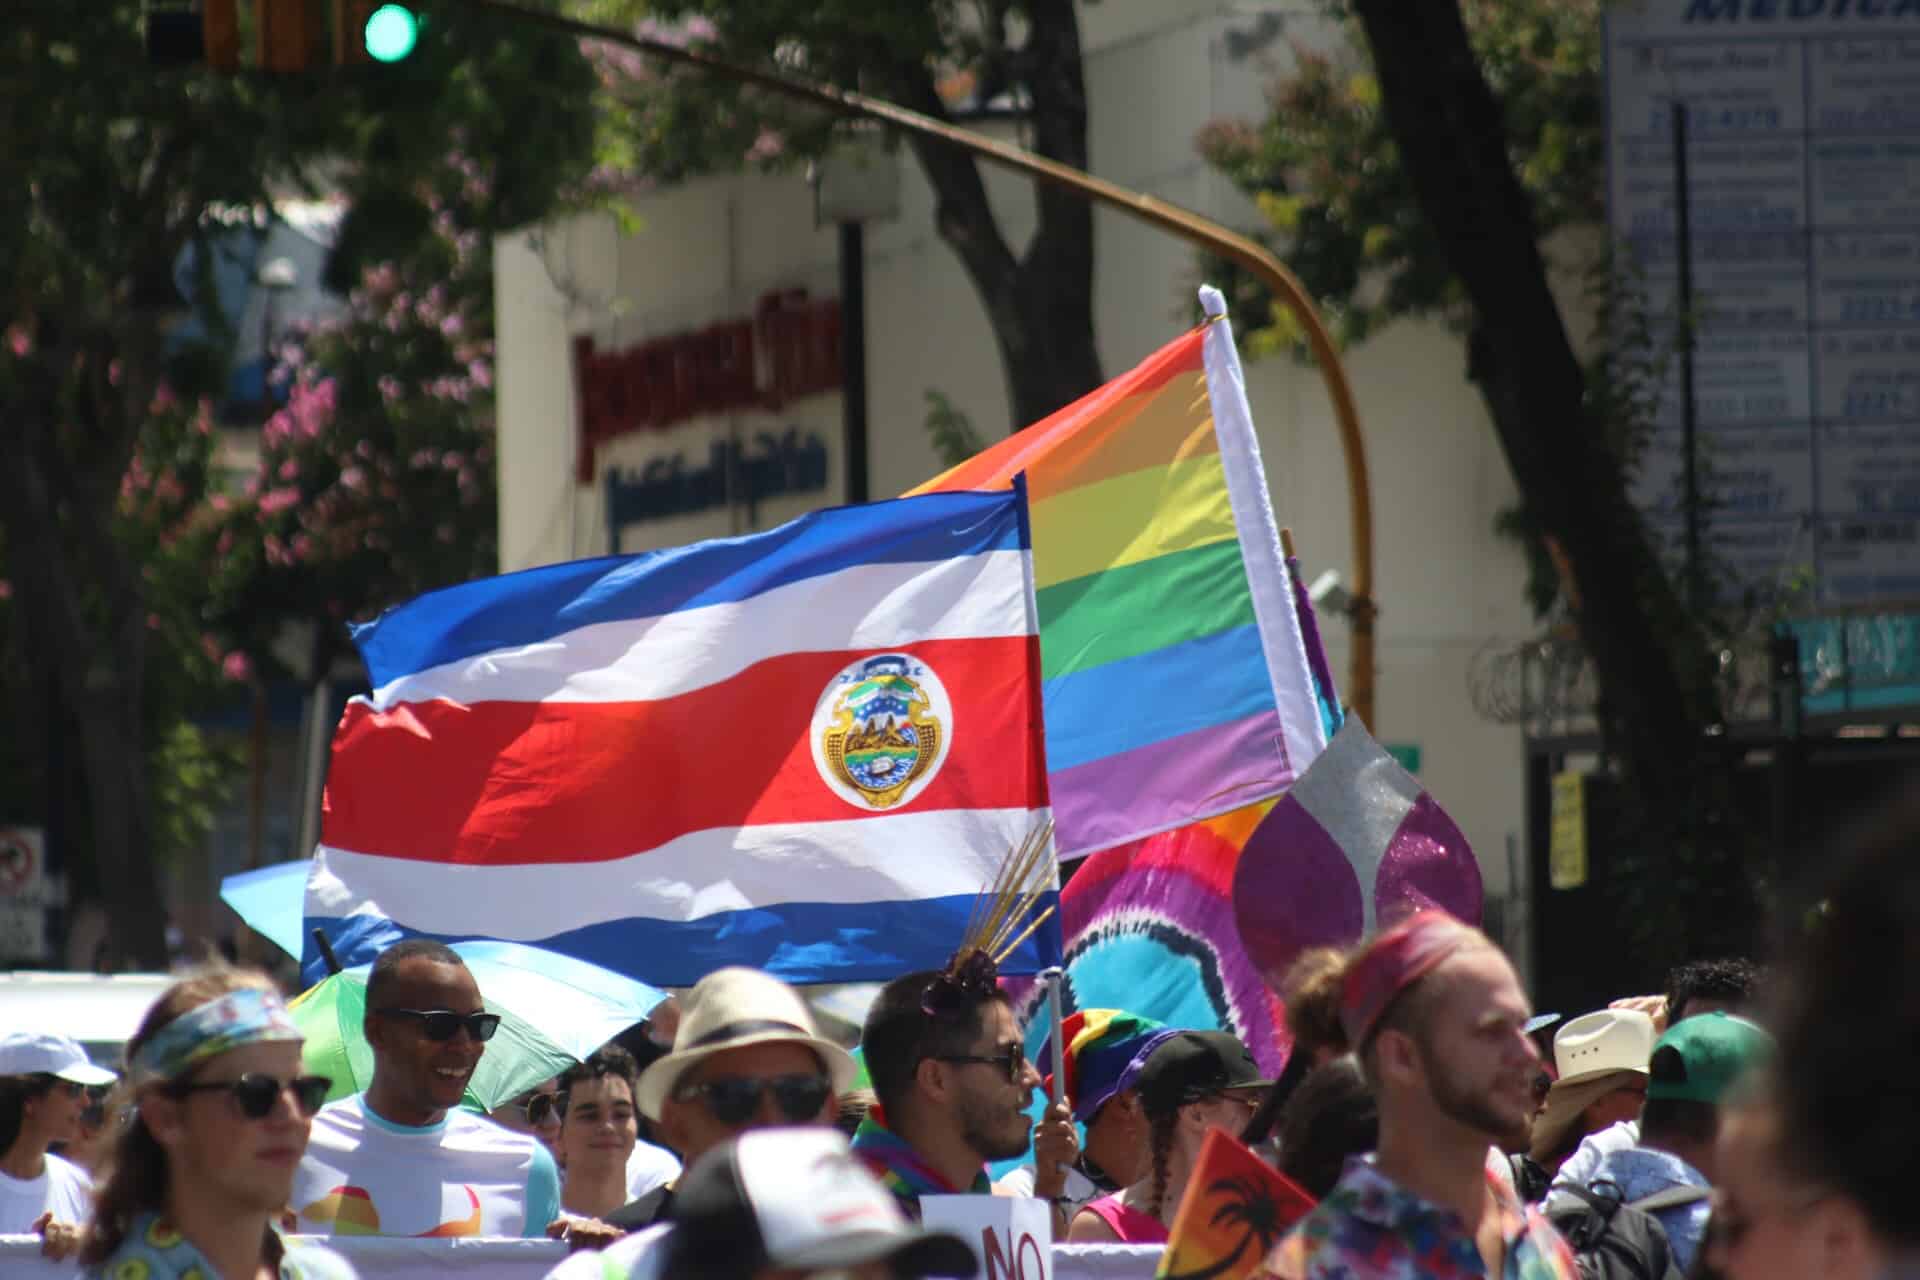 Photos Pride March In Costa Rica The Tico Times Costa Rica News Travel Real Estate